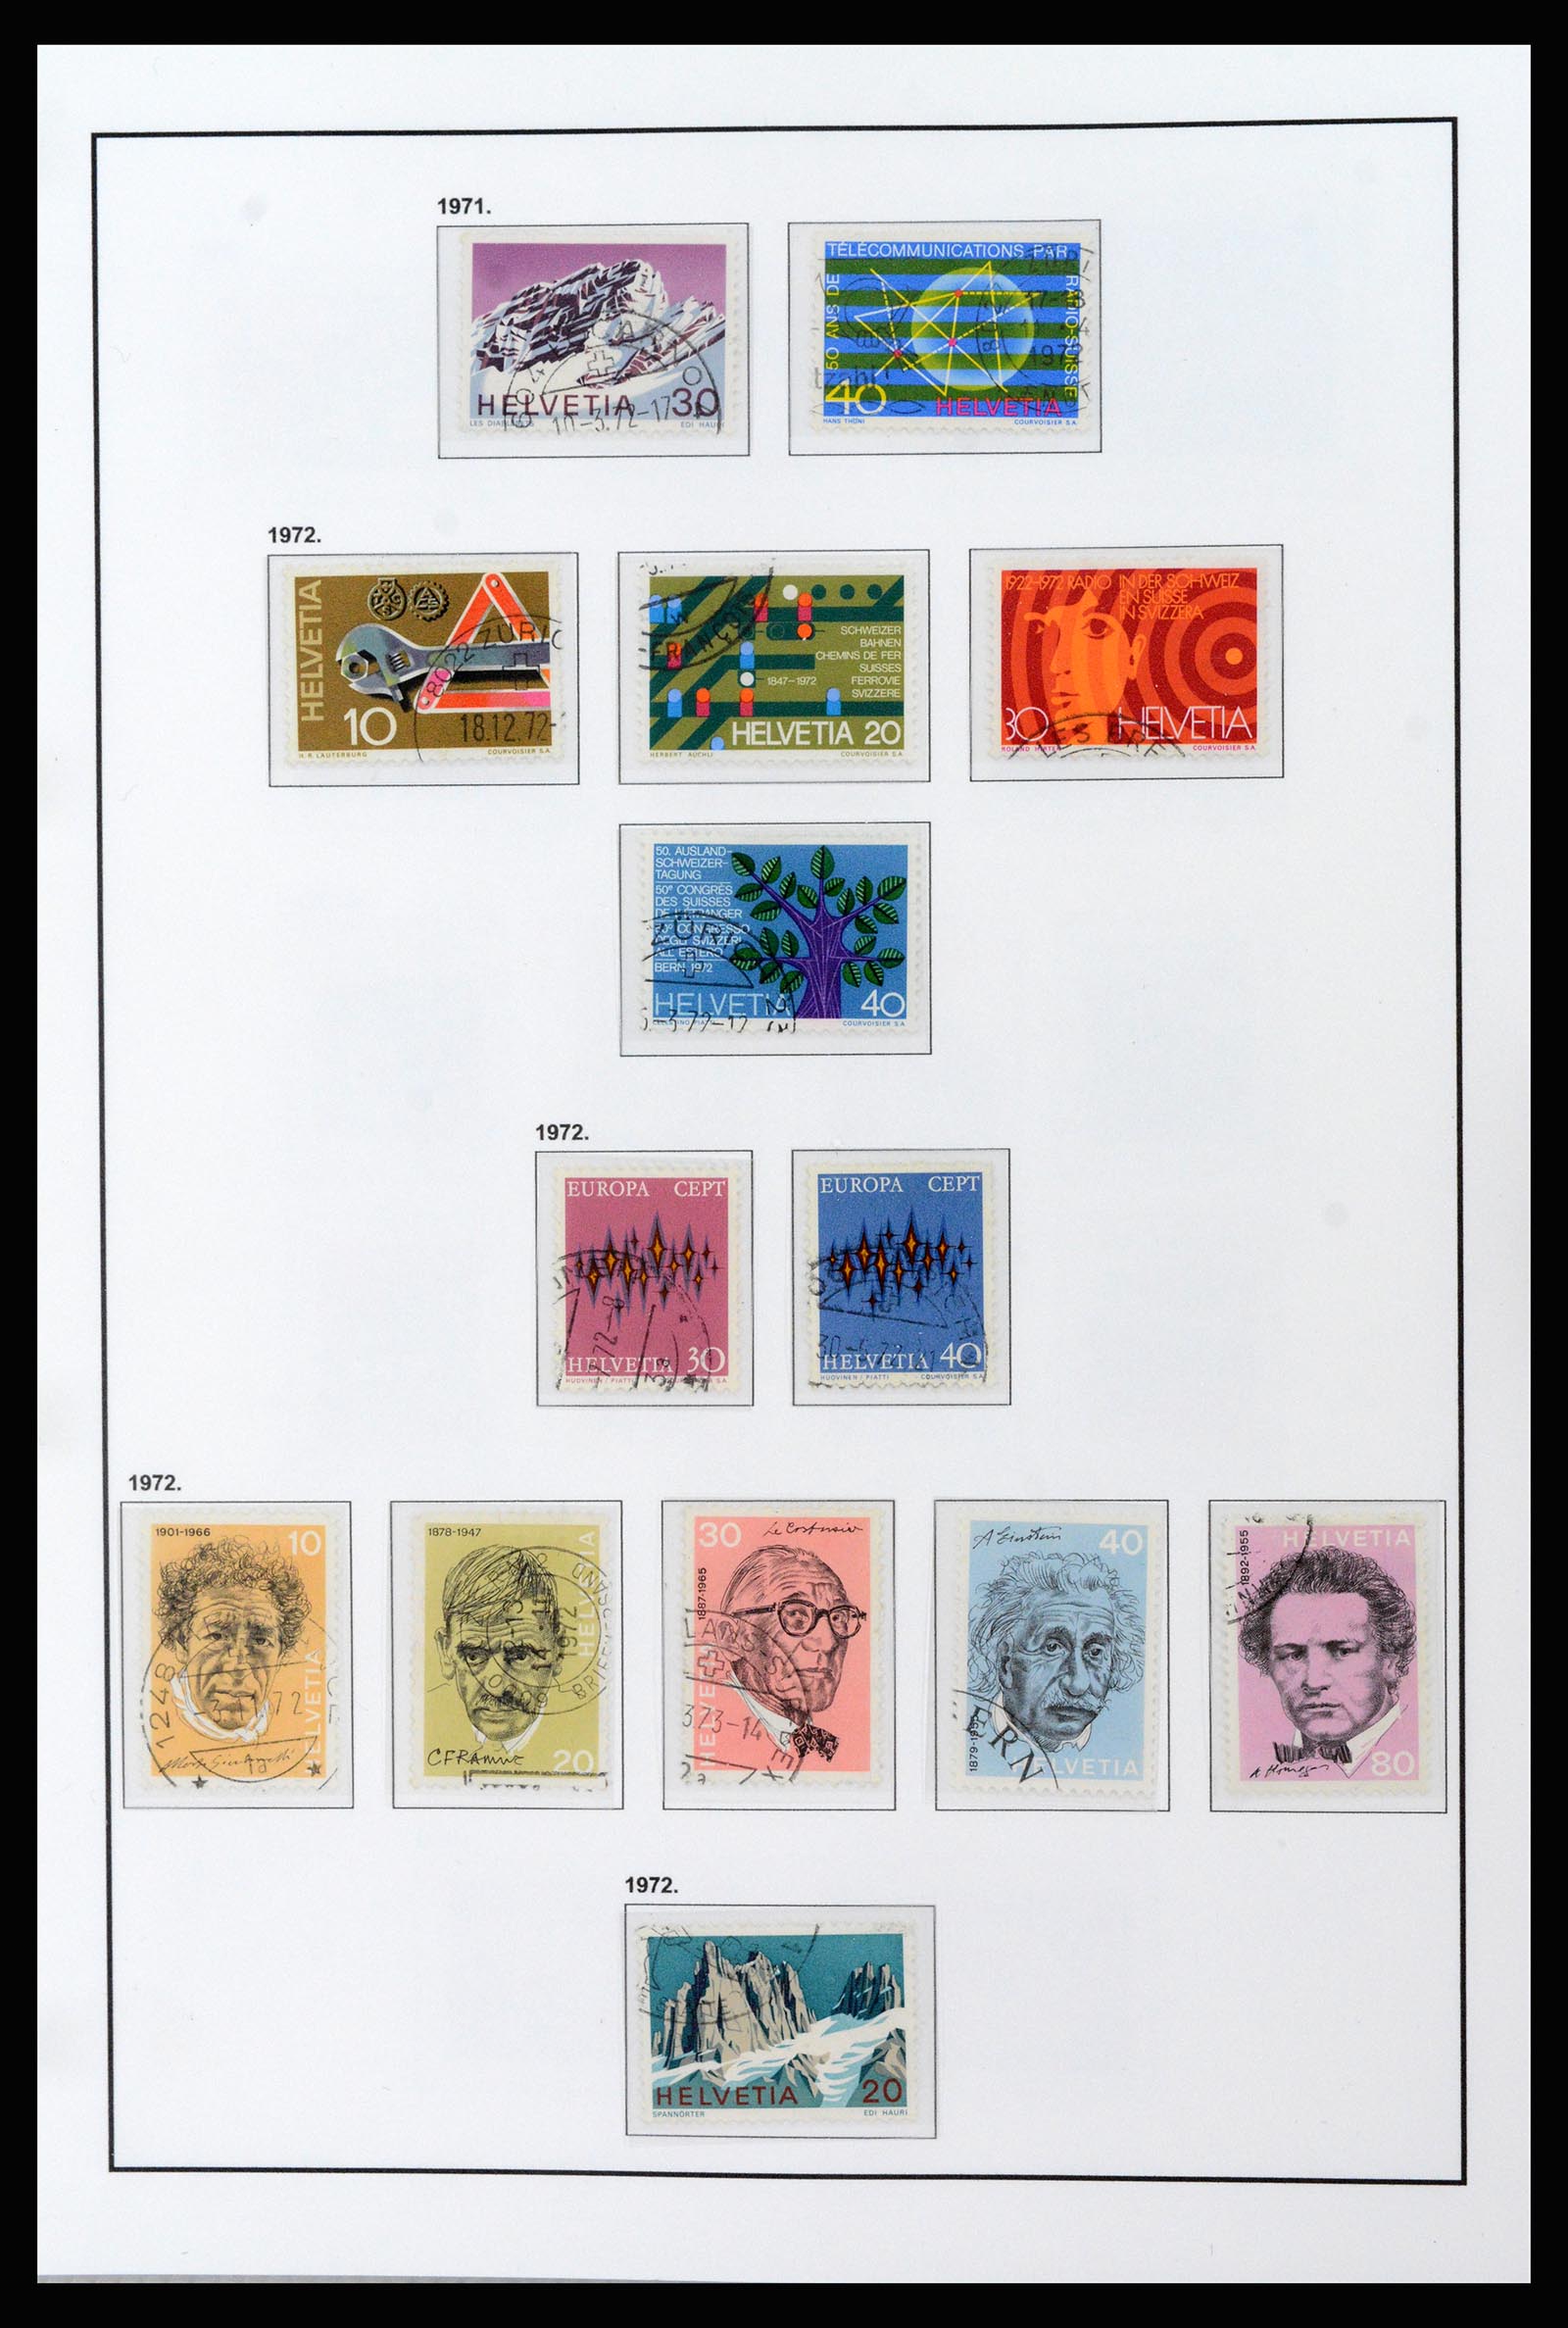 37225 031 - Stamp collection 37225 Switzerland 1854-2020.